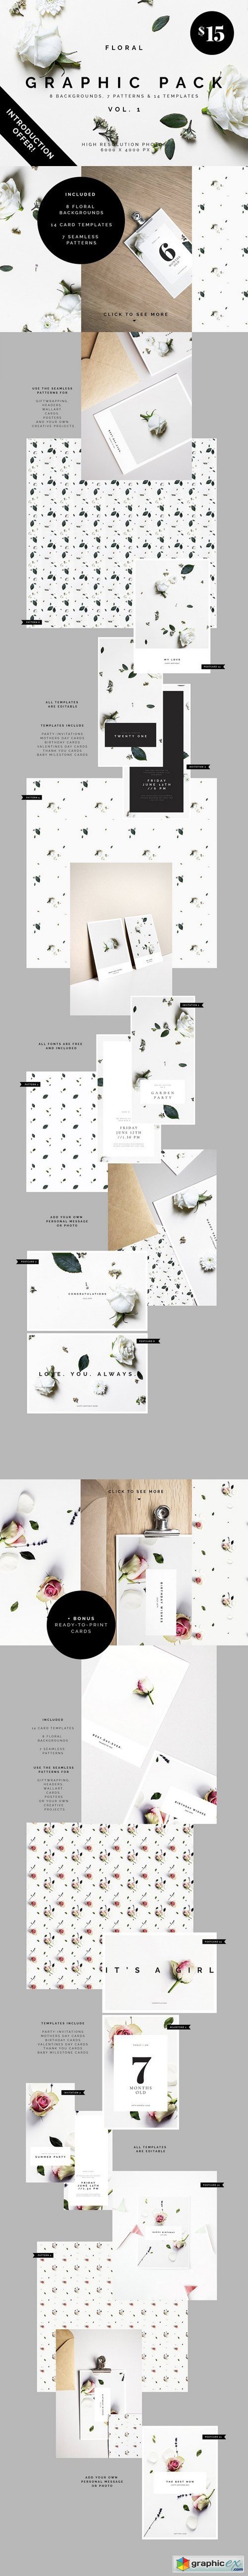 Floral Graphic Pack + bonus files